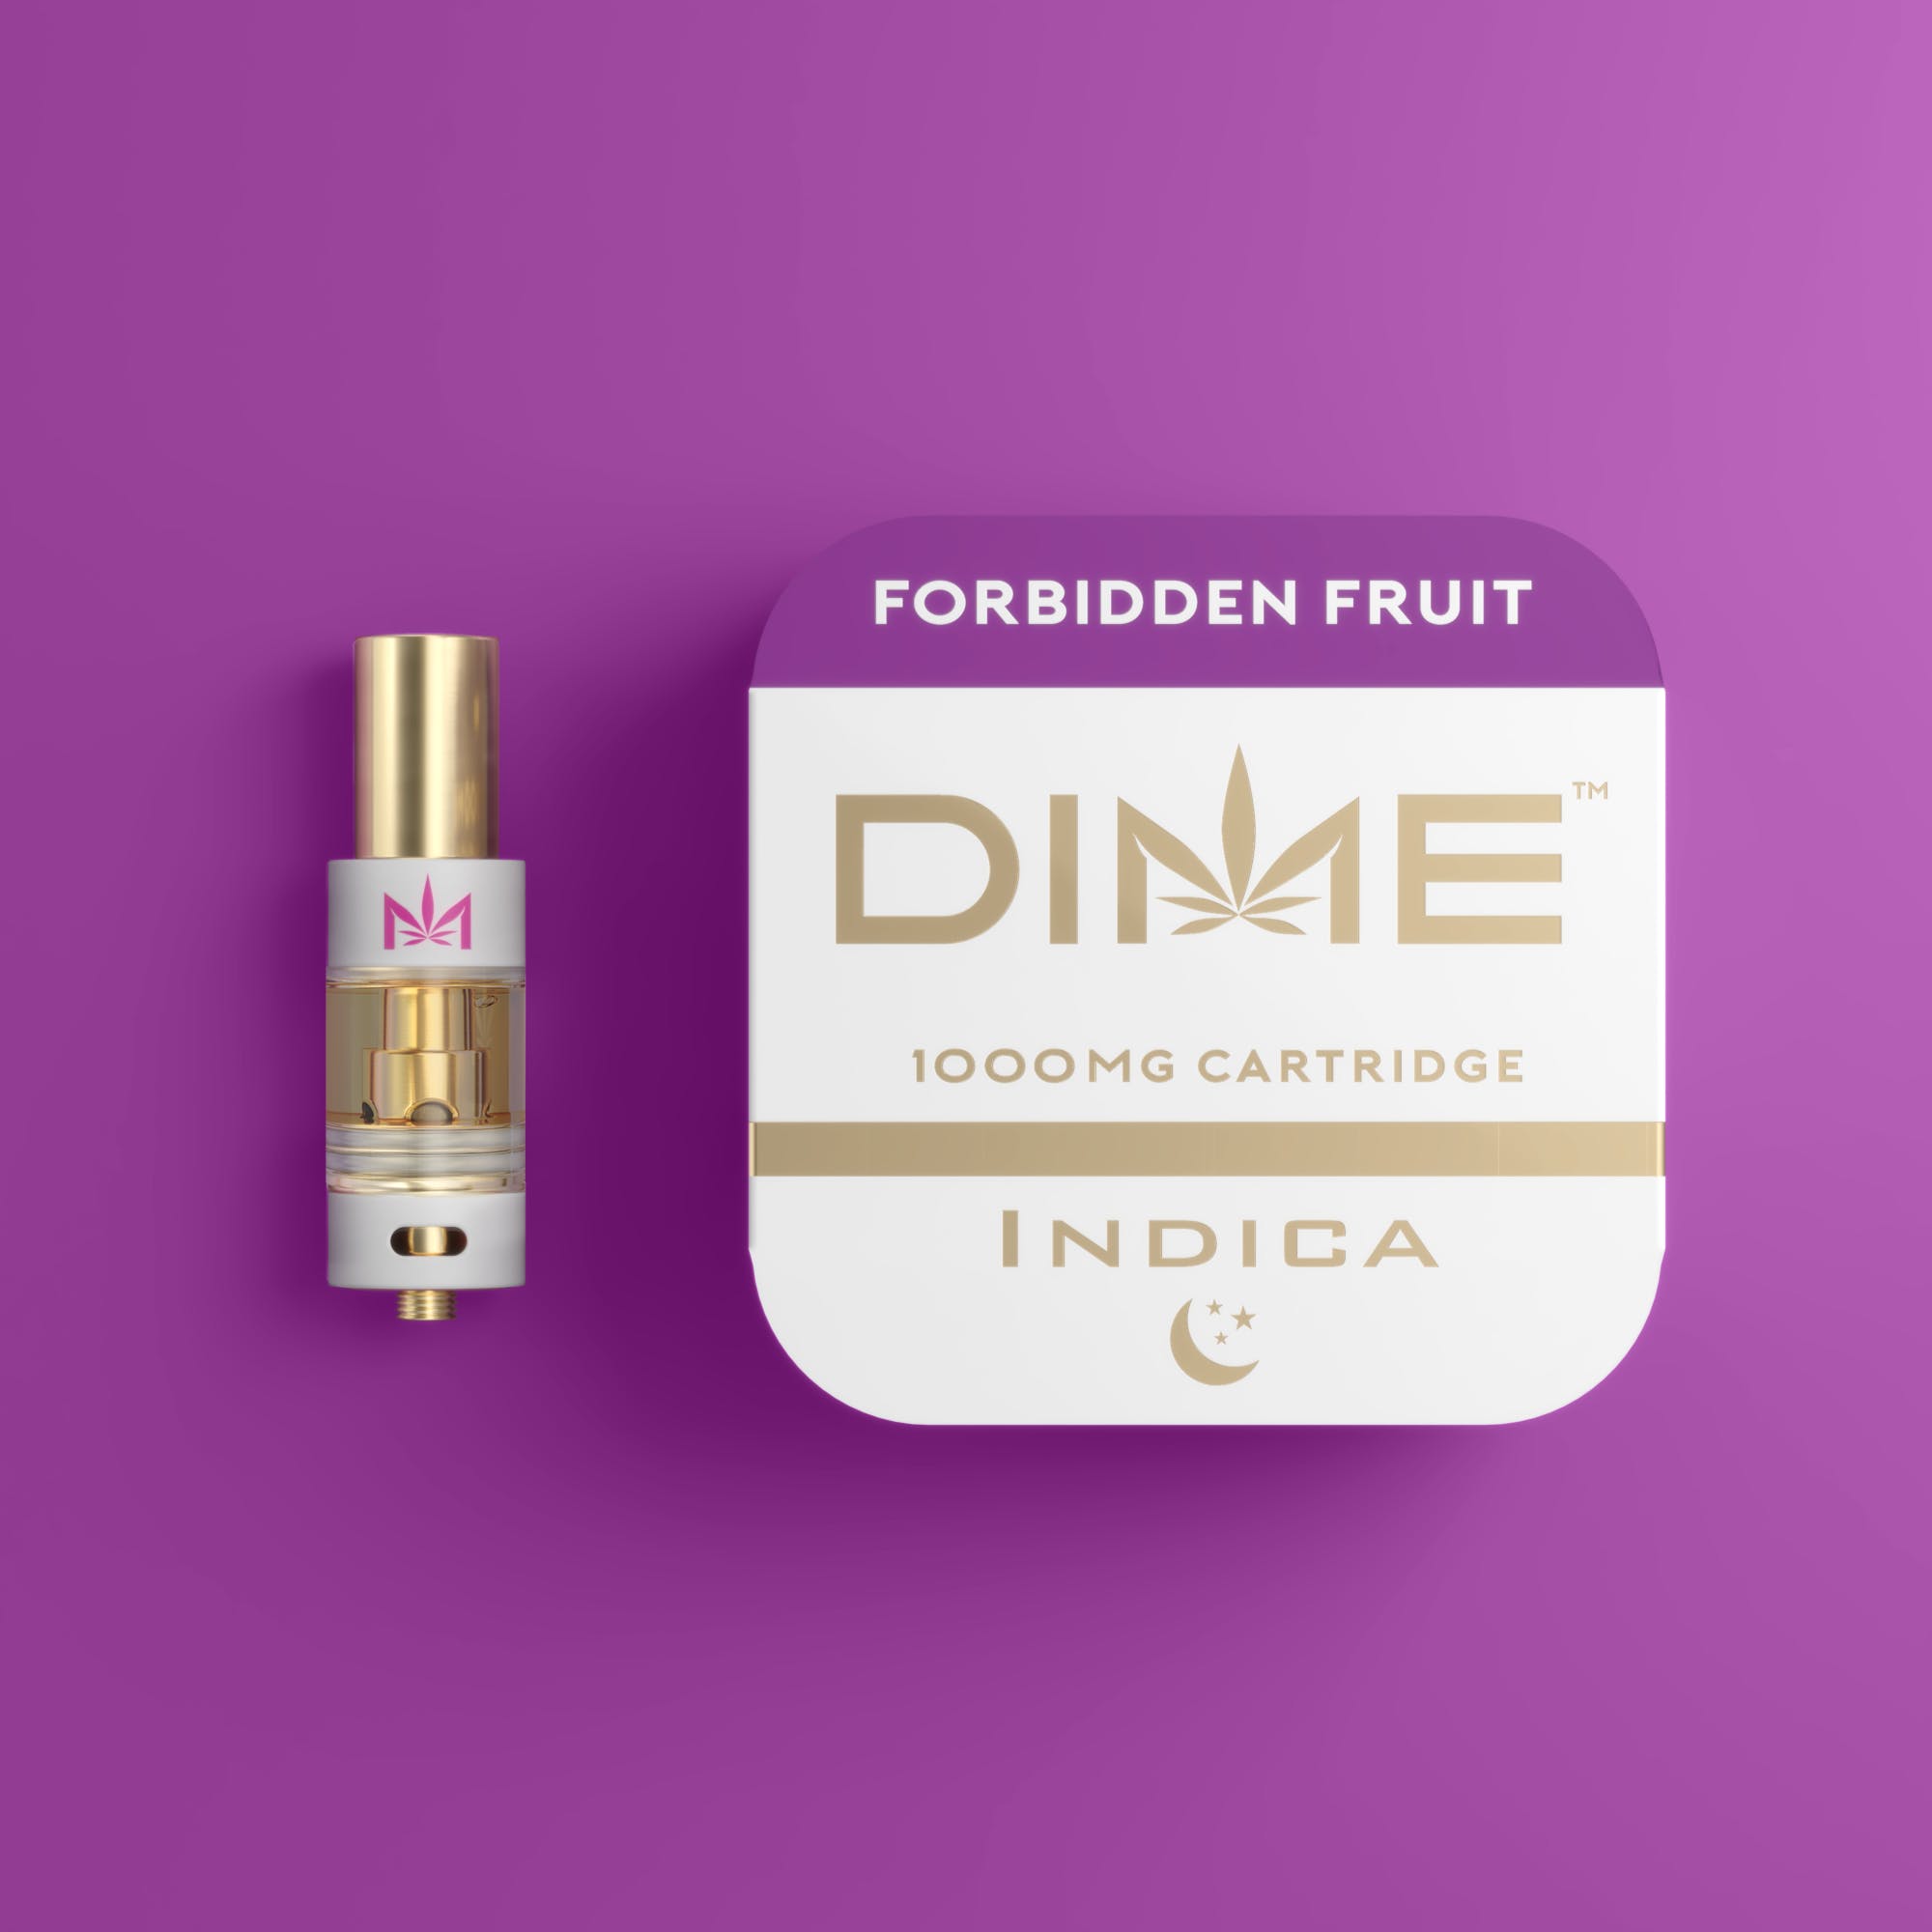 DIME 1000mg Cartridge - Forbidden Fruit